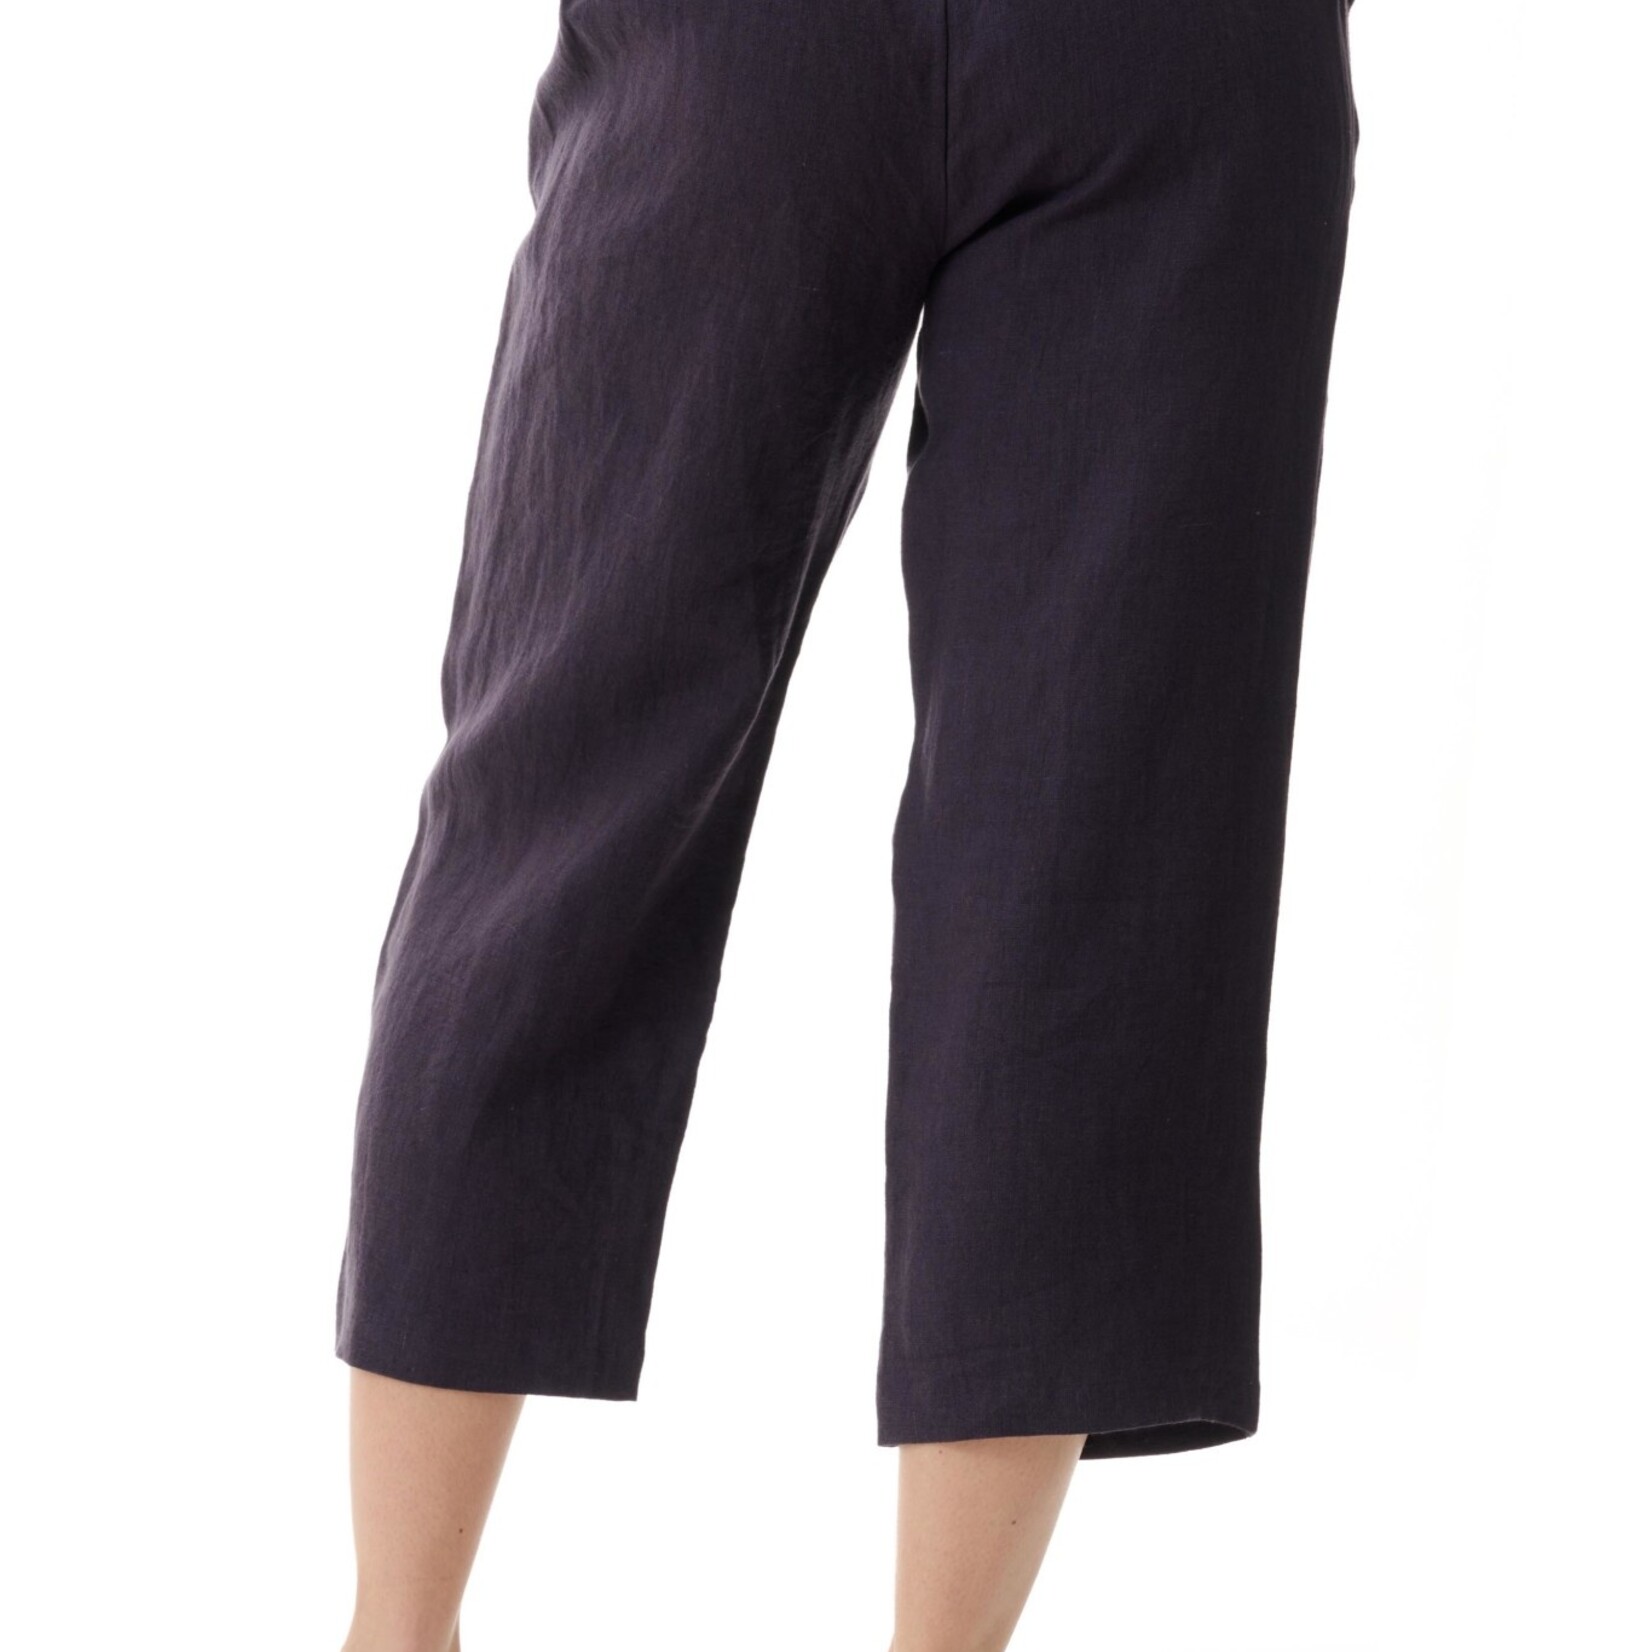 Givoni Black Linen Side Pocket Tie Pants